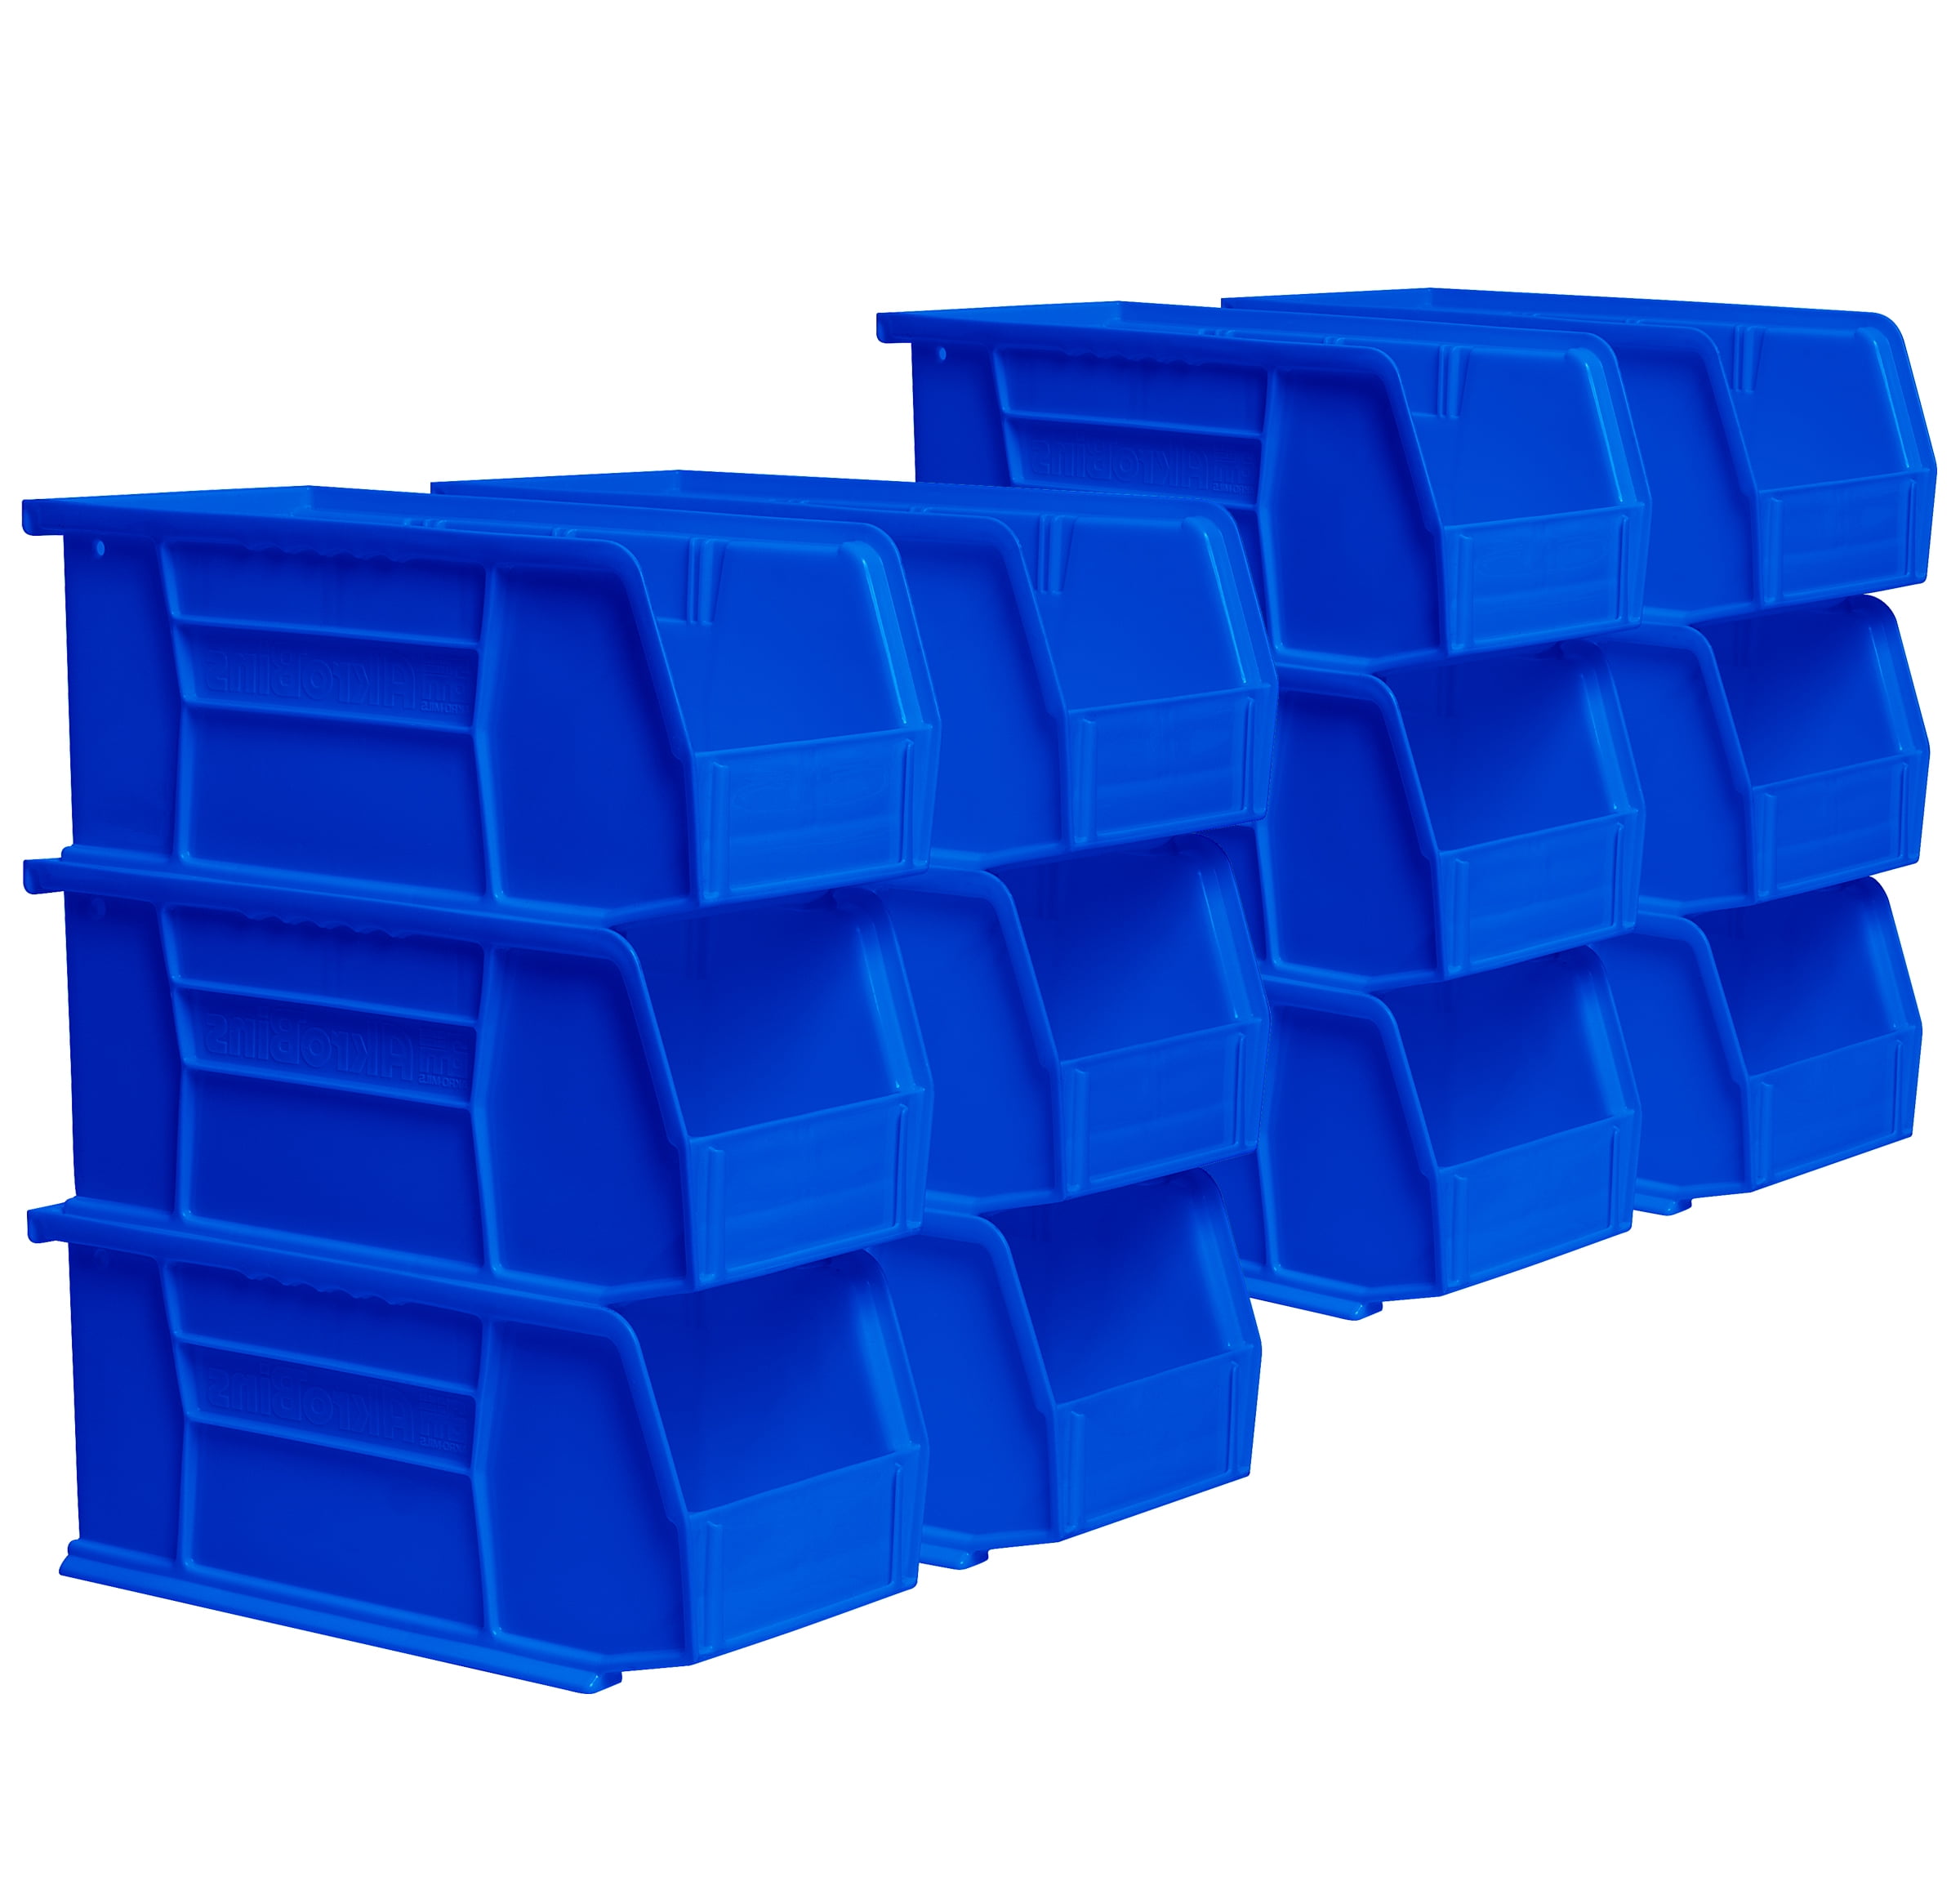 Akro-Mils 30312 System Bin Six Compartment Shelf Storage Bin Unit, (33-Inch  x 12-Inch x 5-Inch), Blue, (5-Pack)